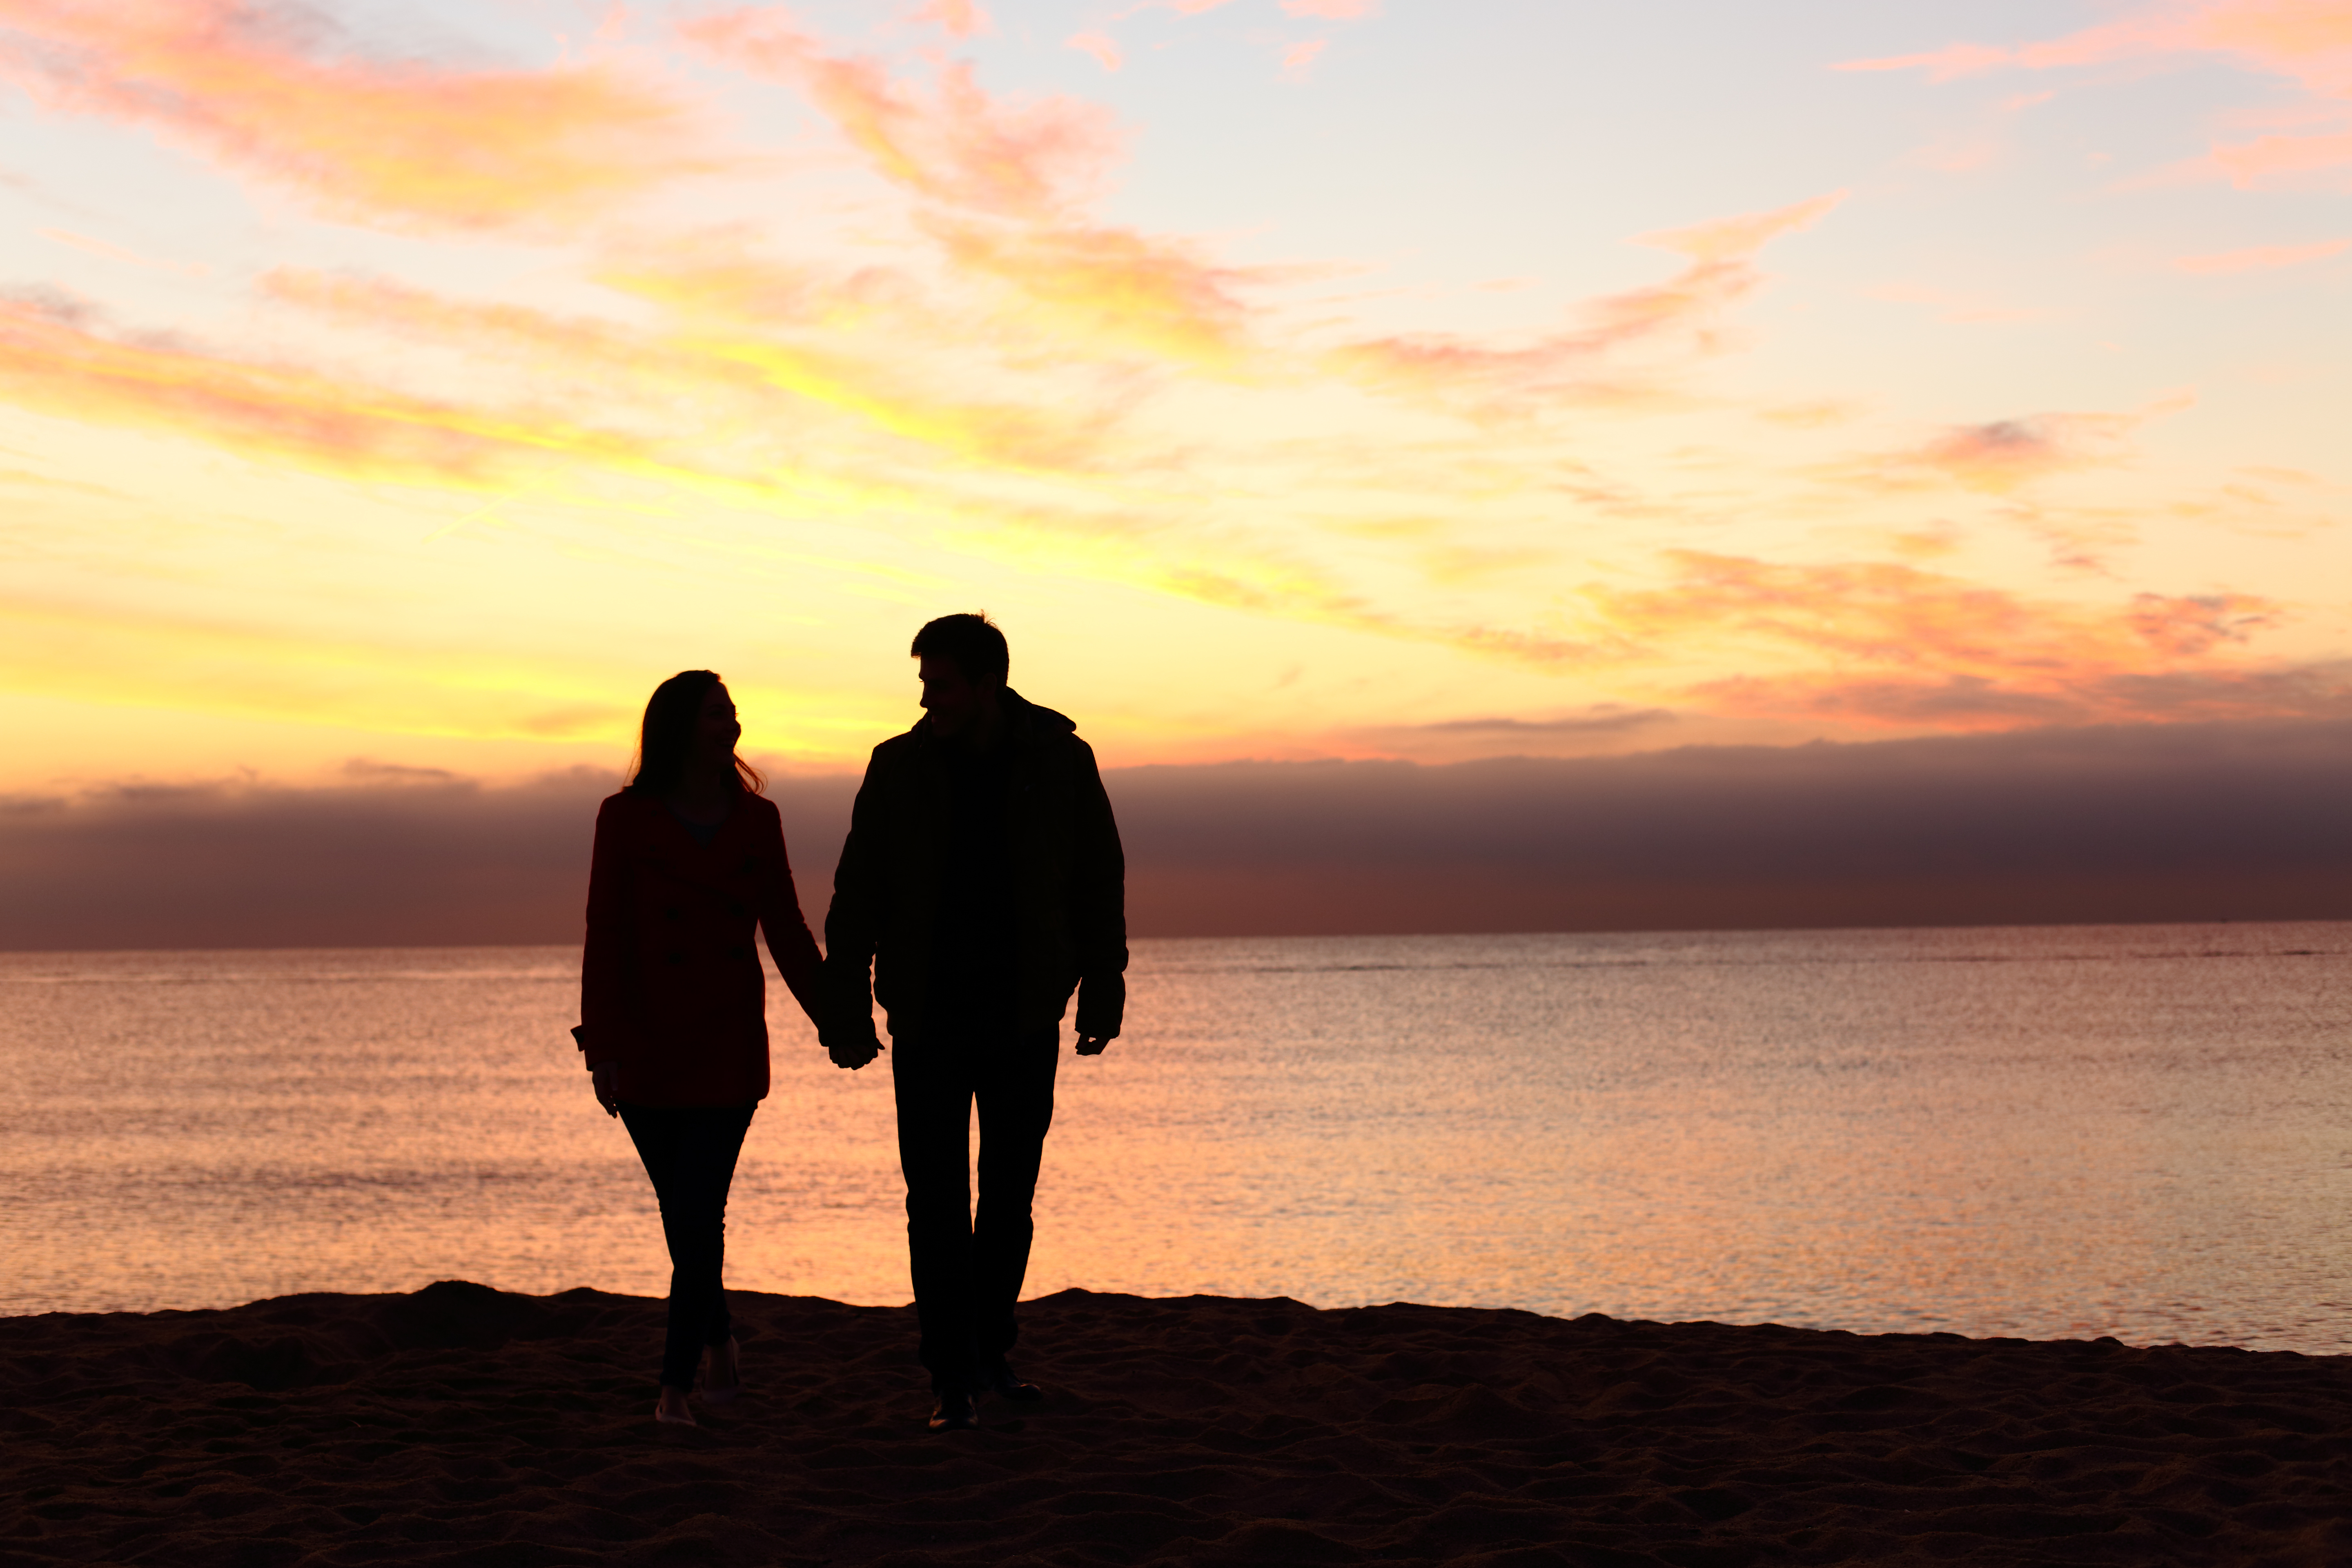 A couple enjoying a beautiful sunset. | Source: Shutterstock